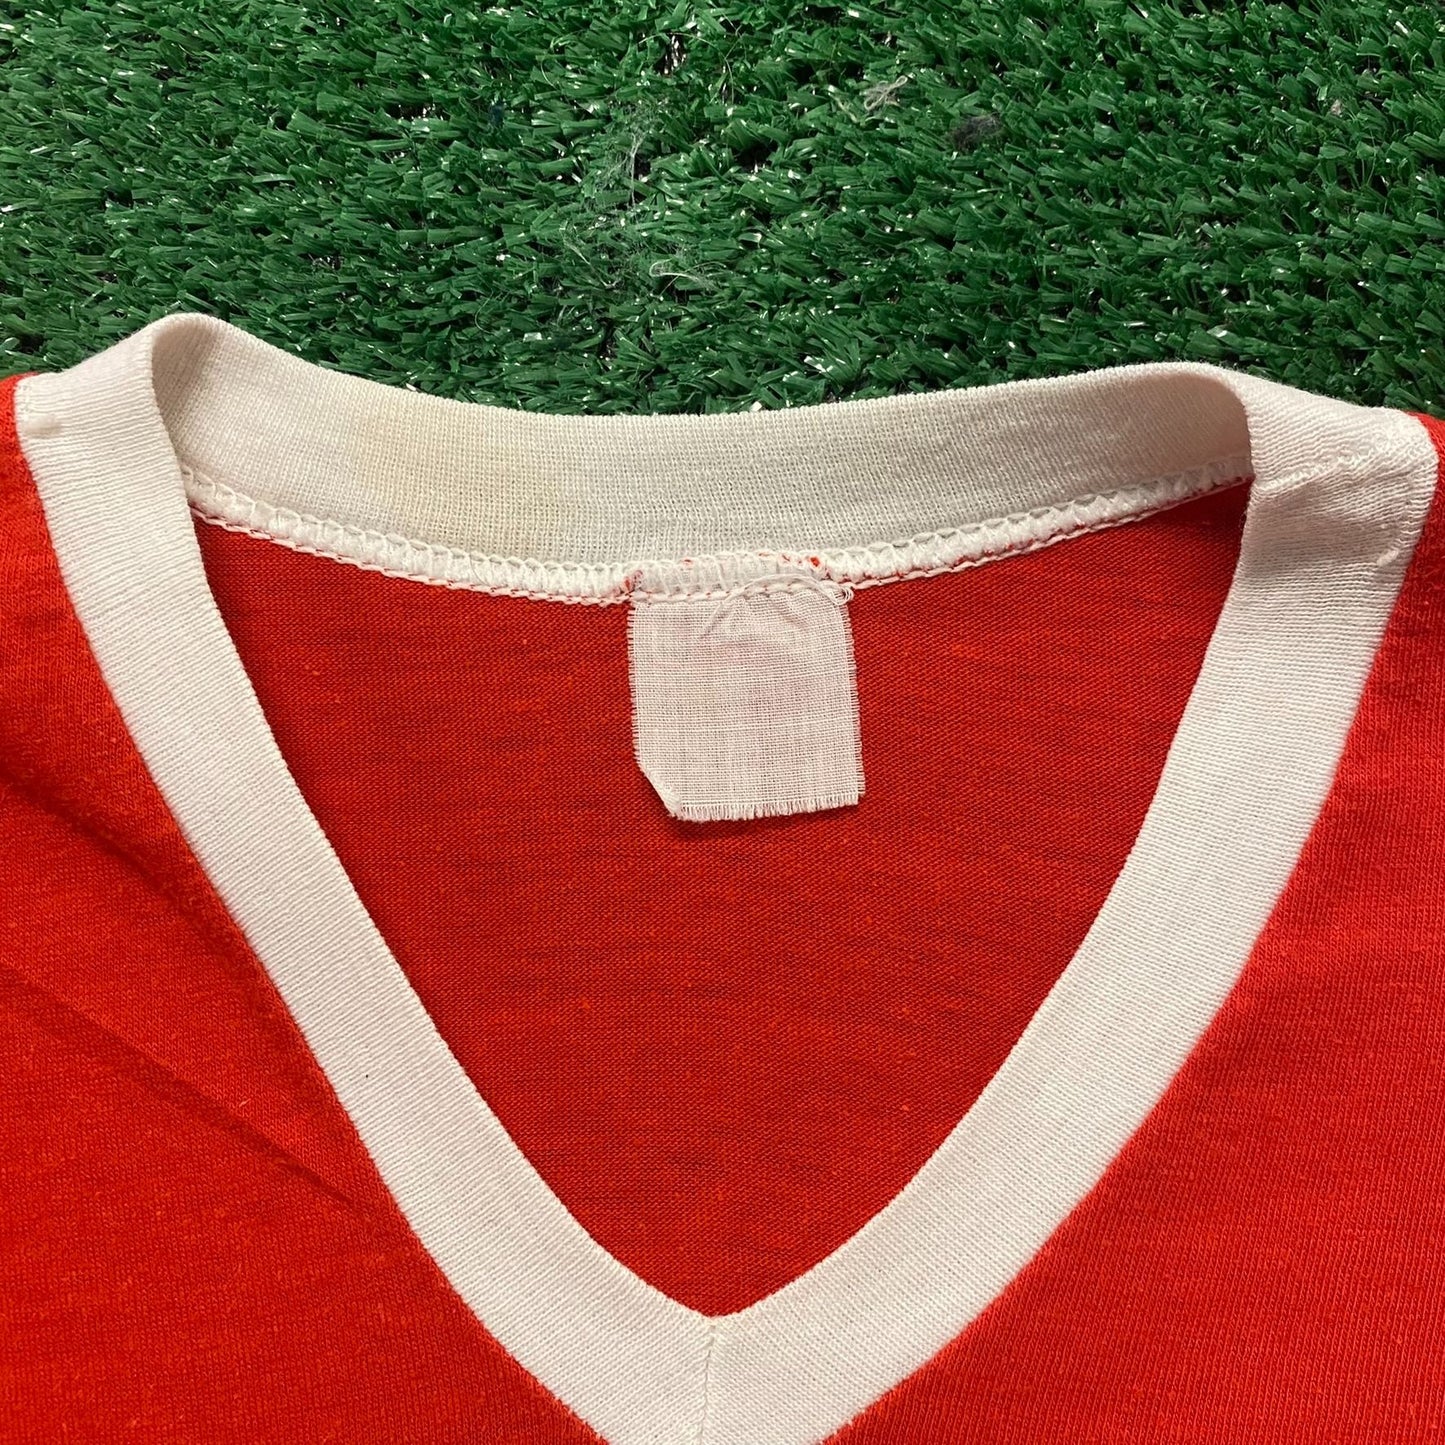 St. Louis Cardinals Baseball Vintage 80s Sports T-Shirt